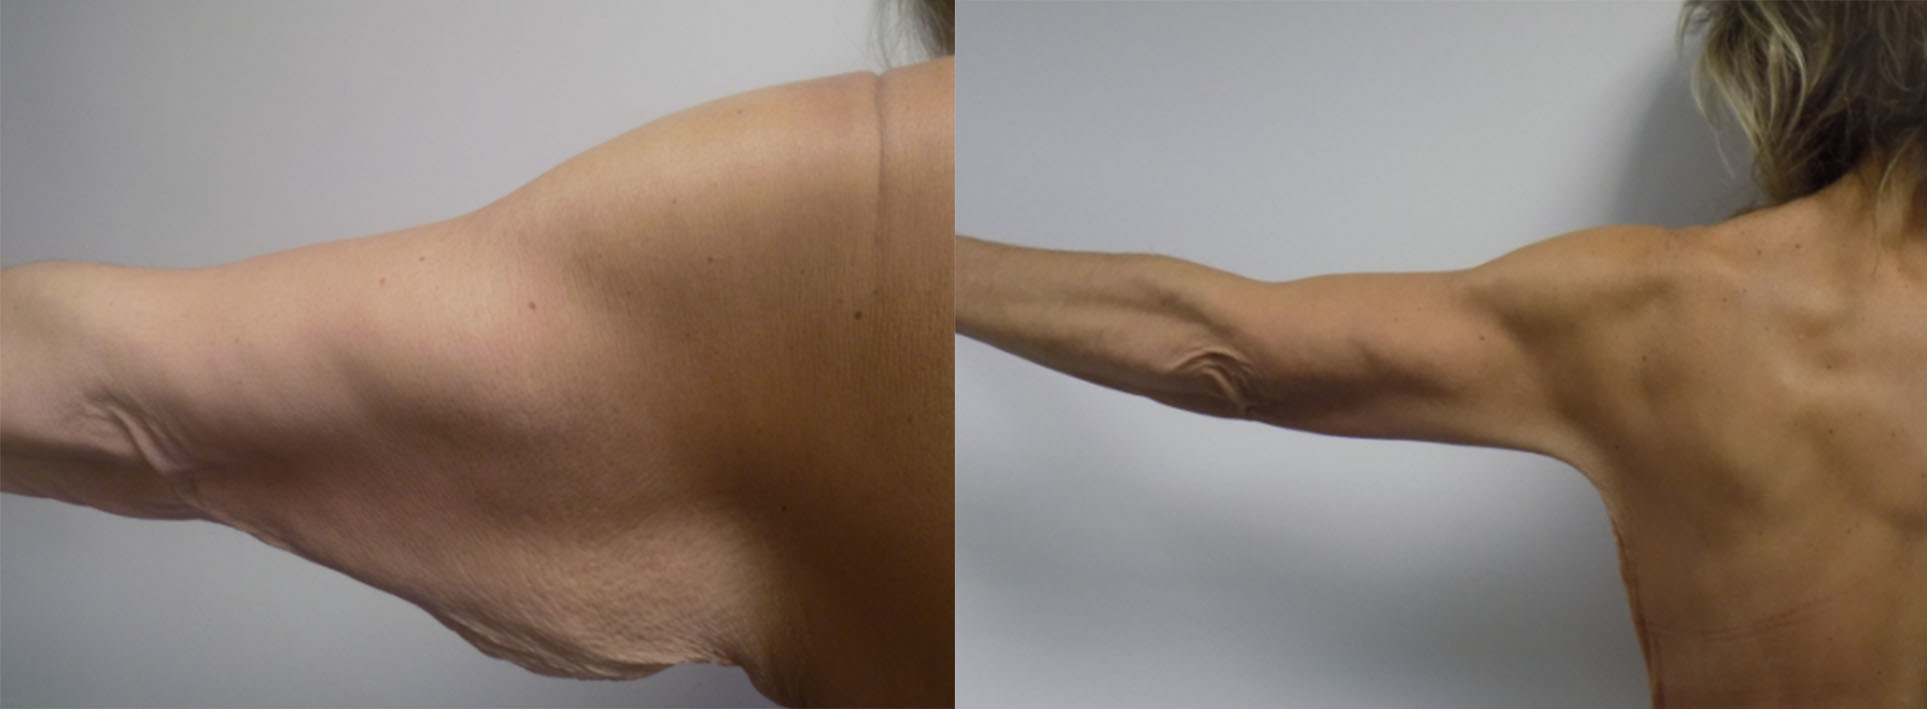 Arm Lift Procedure - Brachioplasty